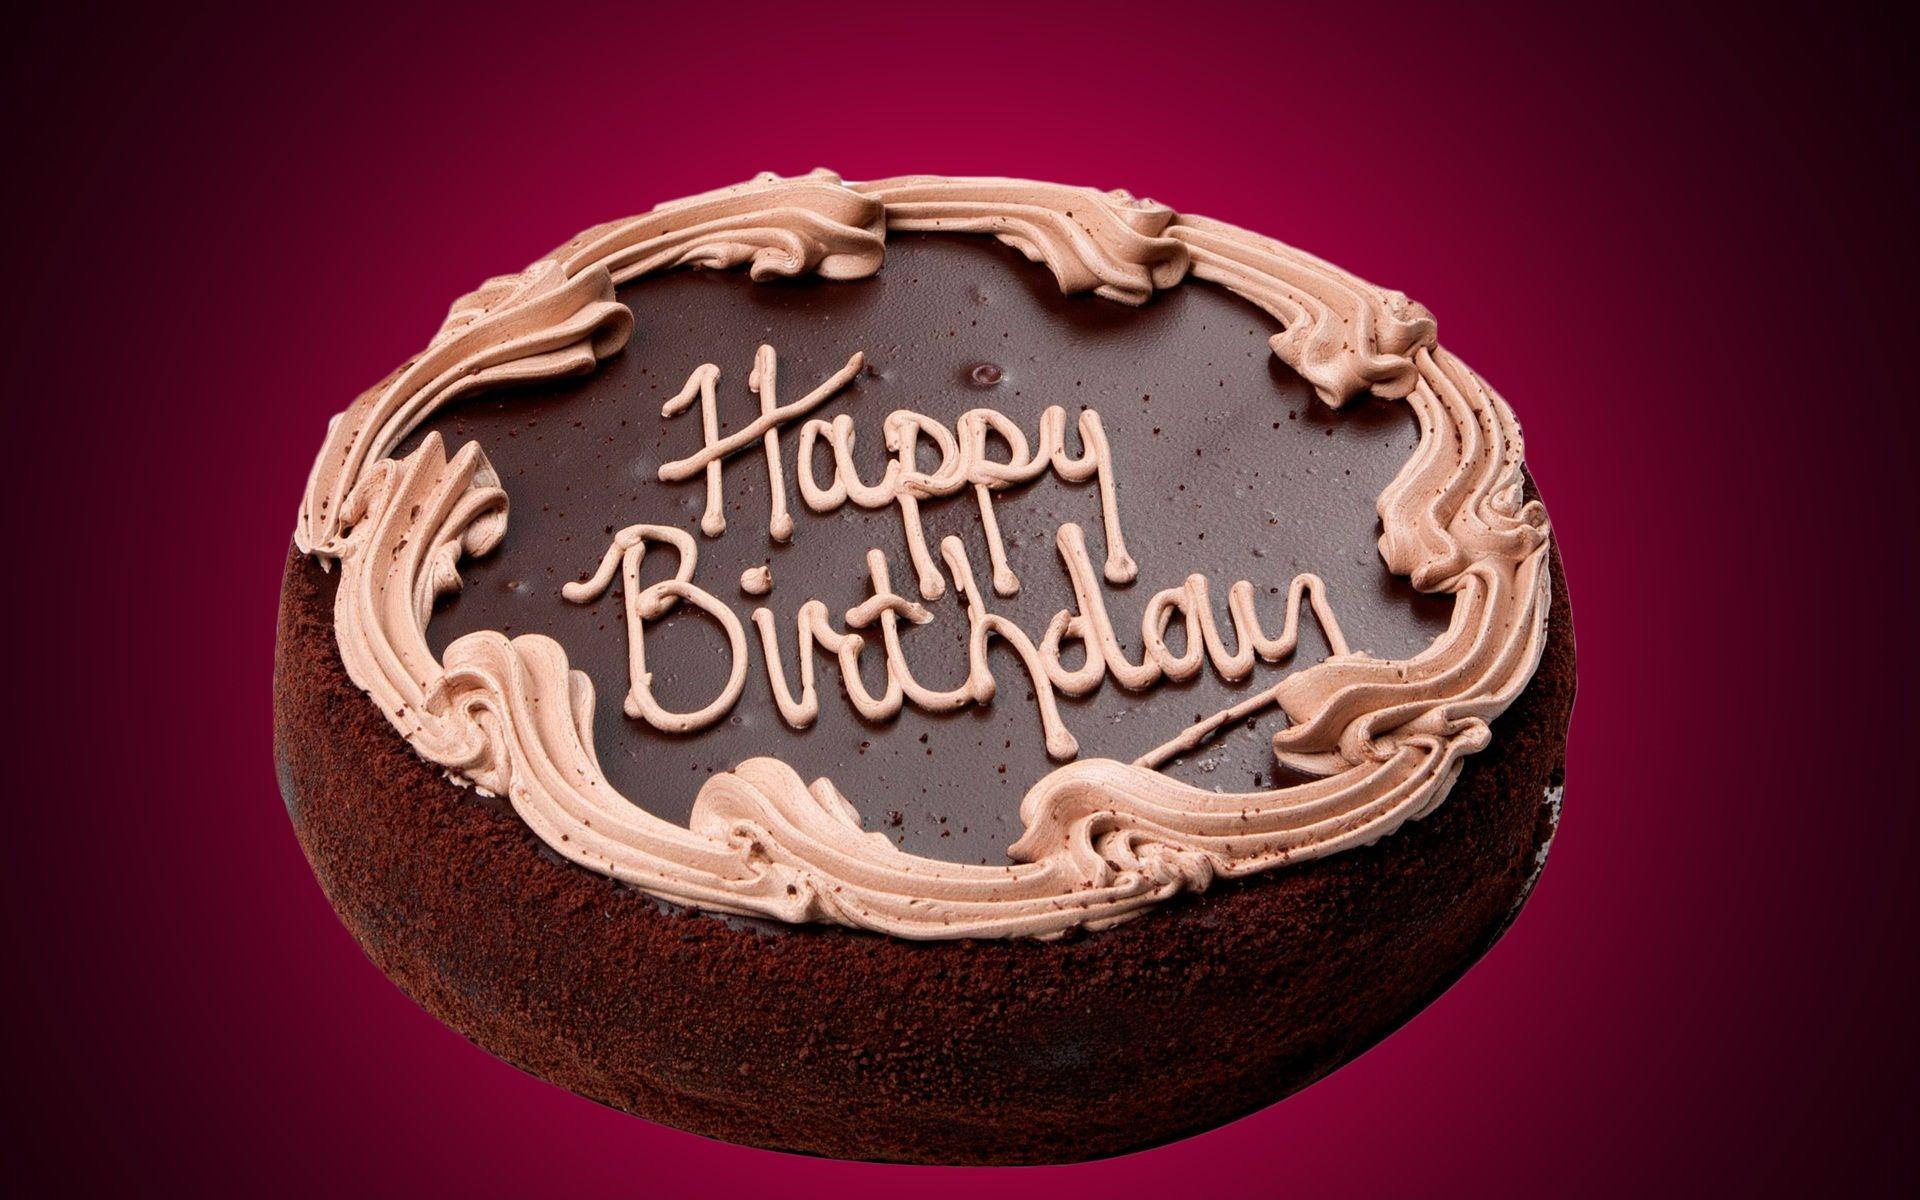 Happy birthday chocolate cake wallpaper. Beautiful HD wallpaper